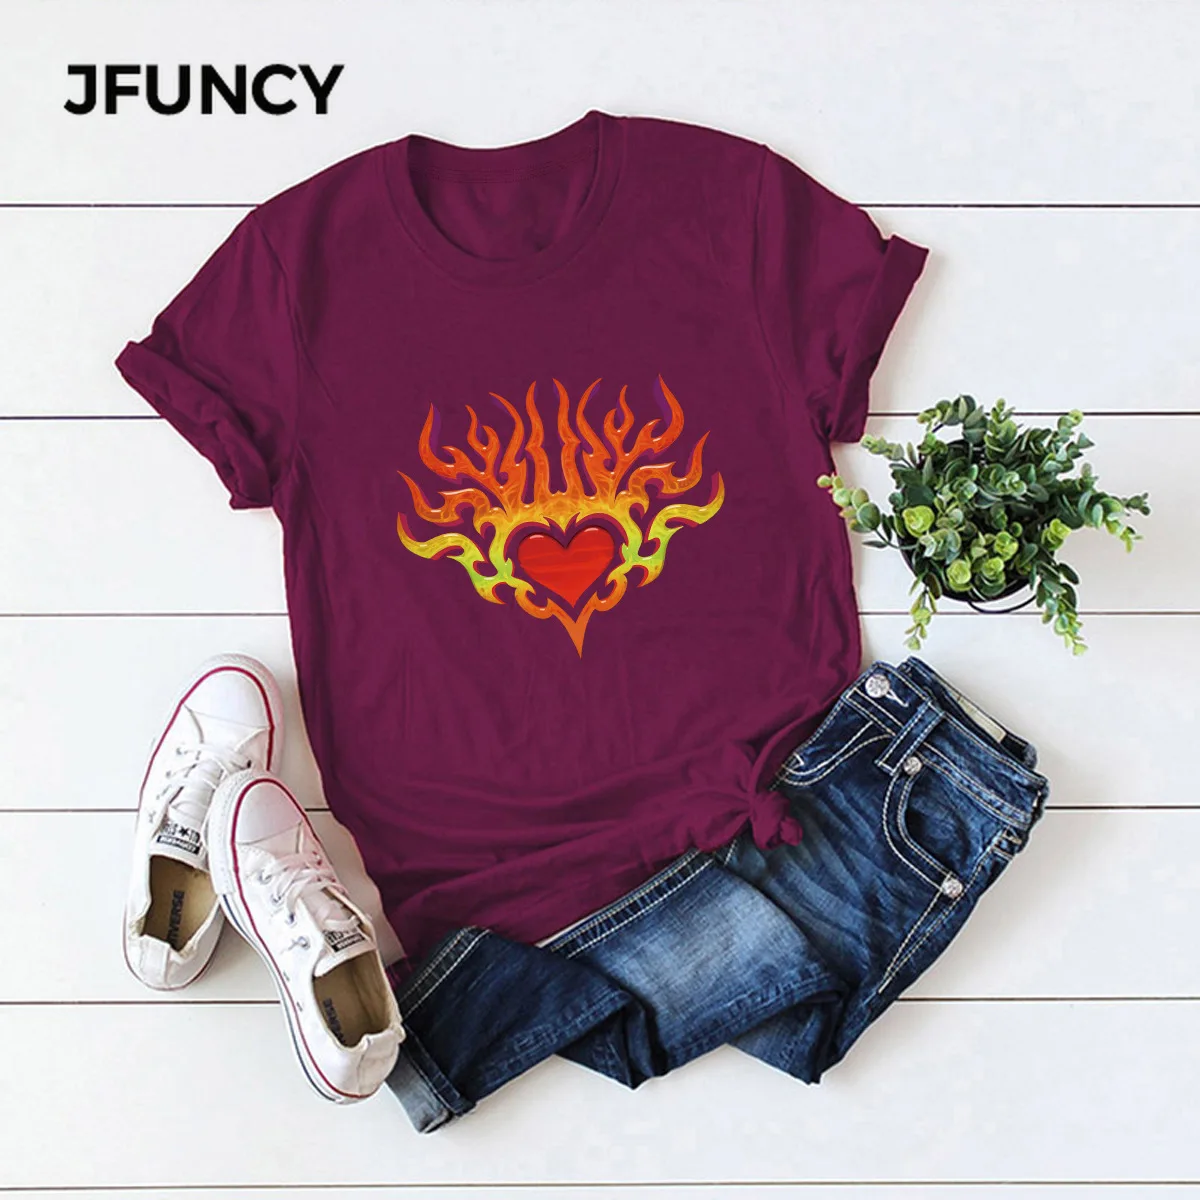 JFUNCY  Women Tops Flame Print Casual Woman Cotton T-shirt Summer Female Tee Shirt Oversize Short Sleeve Lady Tshirt